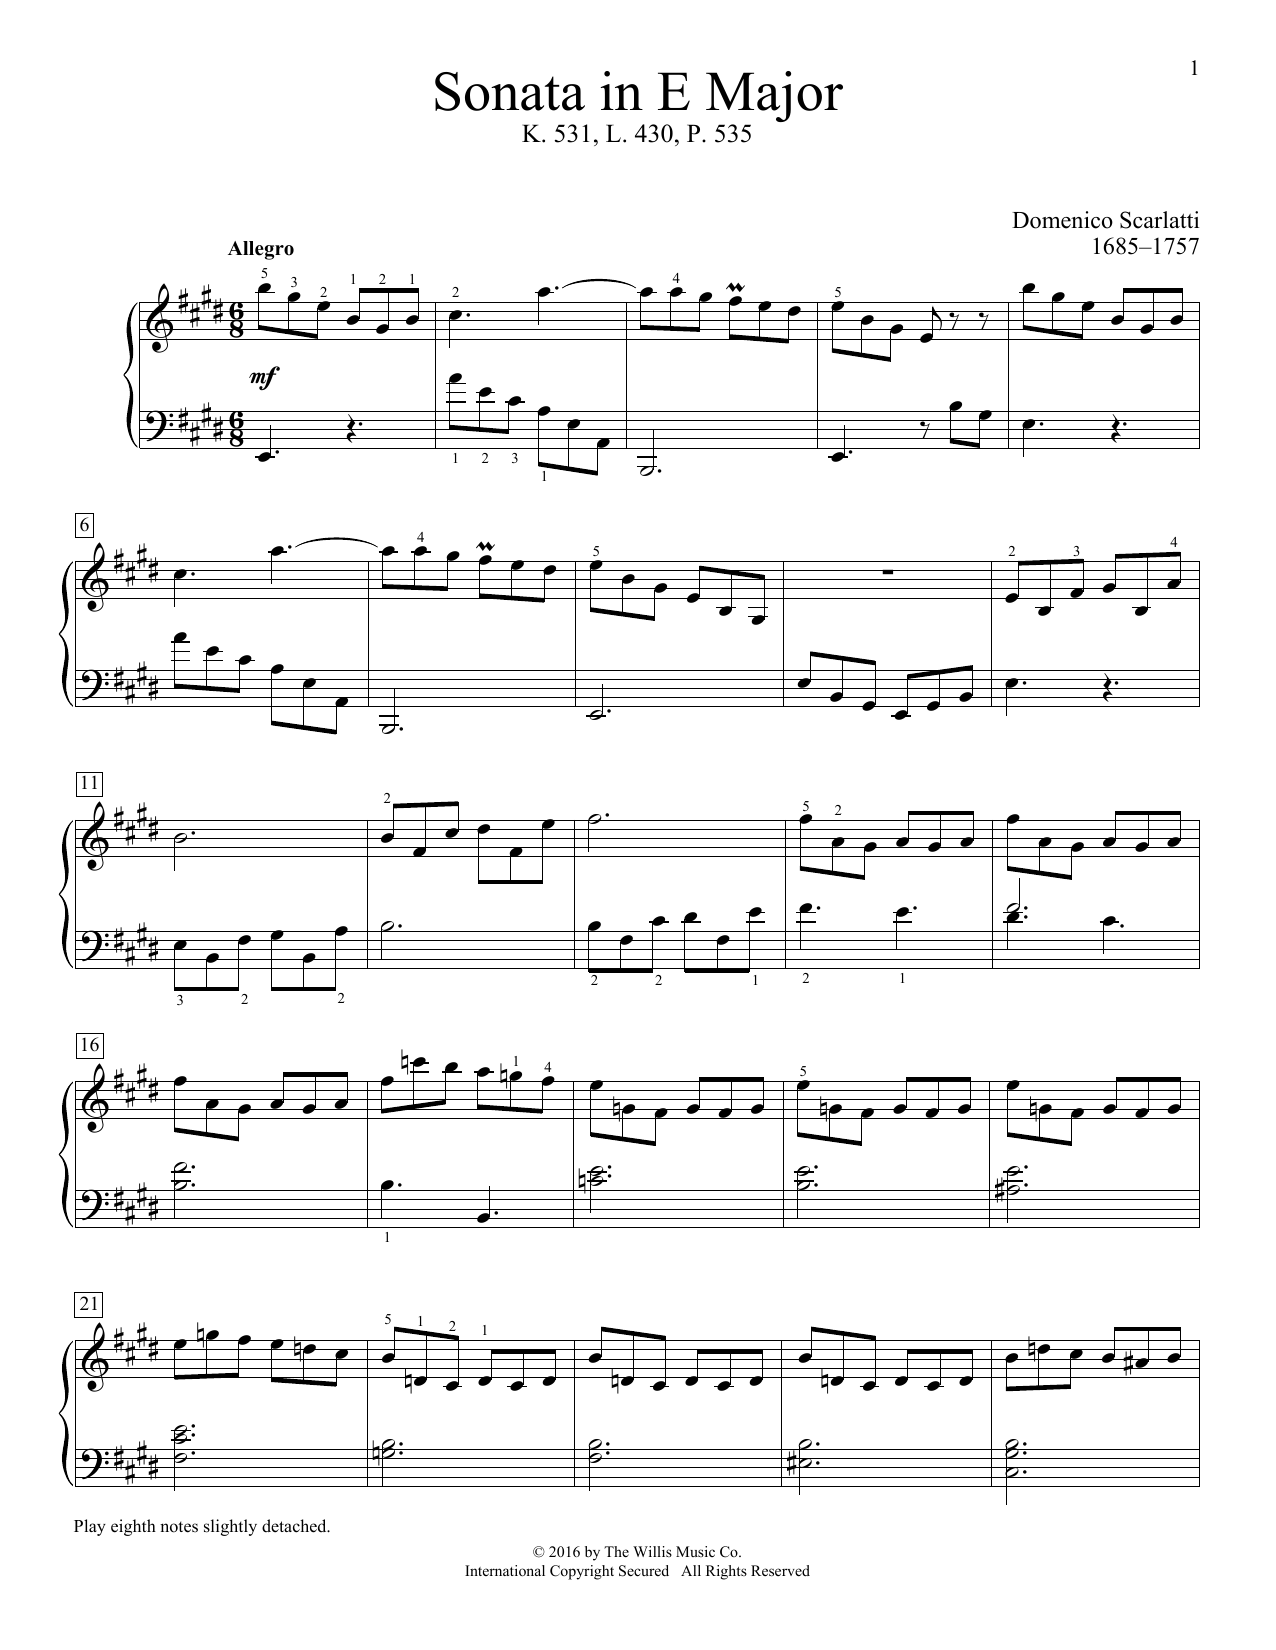 Download Domenico Scarlatti Sonata In E Major, K. 531, L. 430, P. 535 Sheet Music and learn how to play Educational Piano PDF digital score in minutes